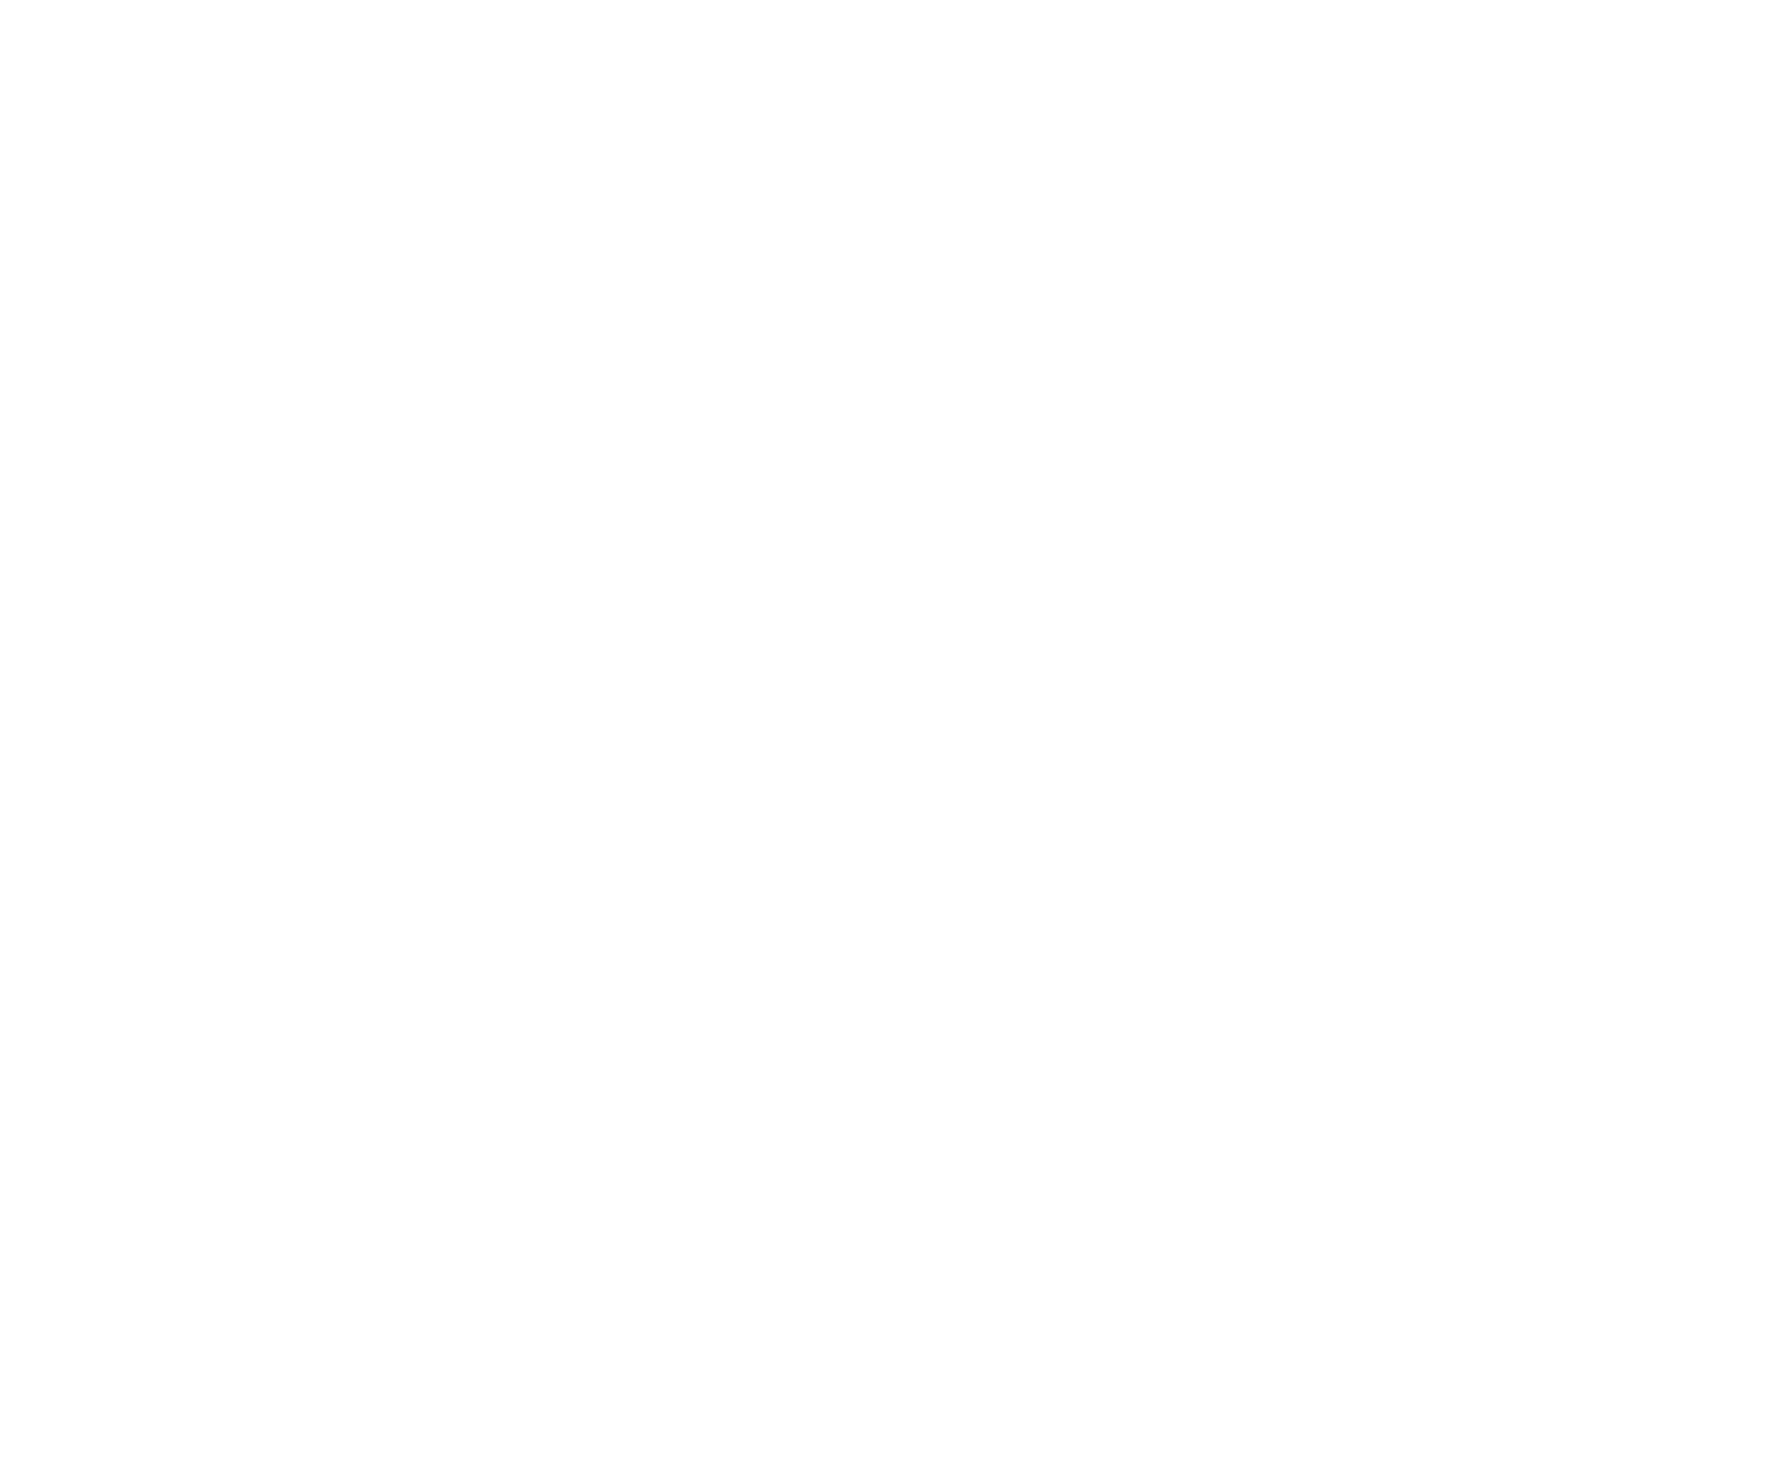 Logo KPRM